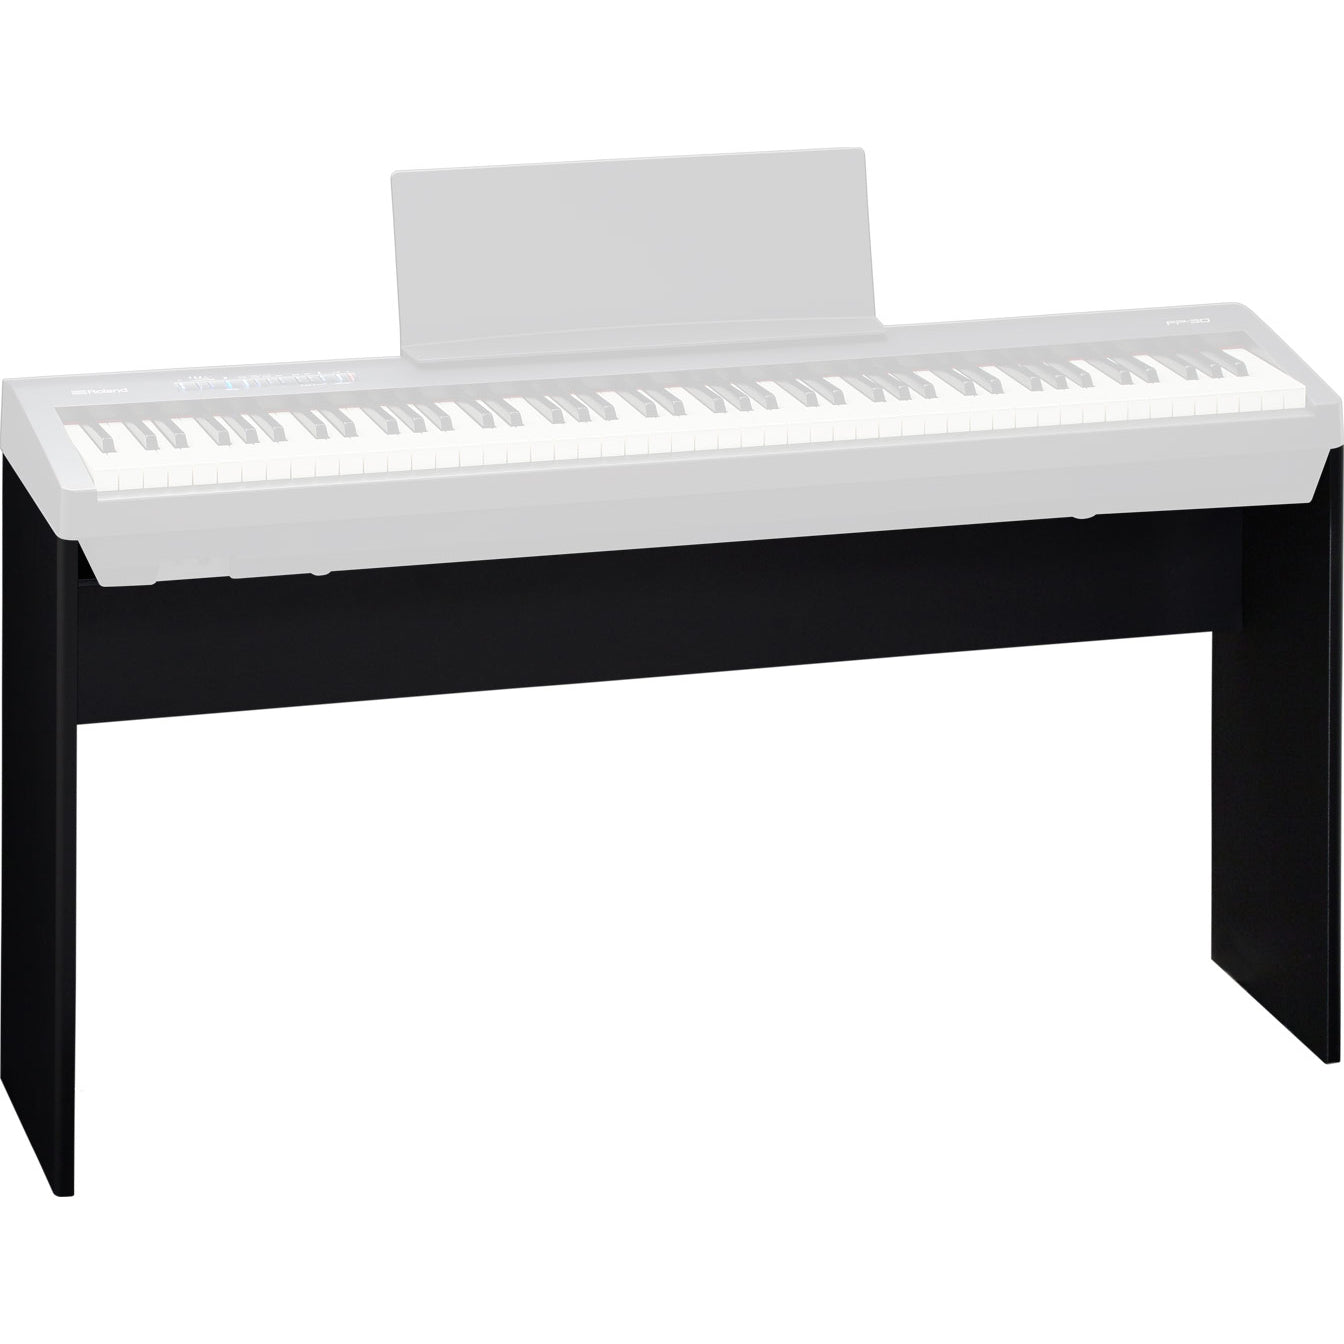 Roland KSC-70 Digital Piano Stand Black - Guitarworks